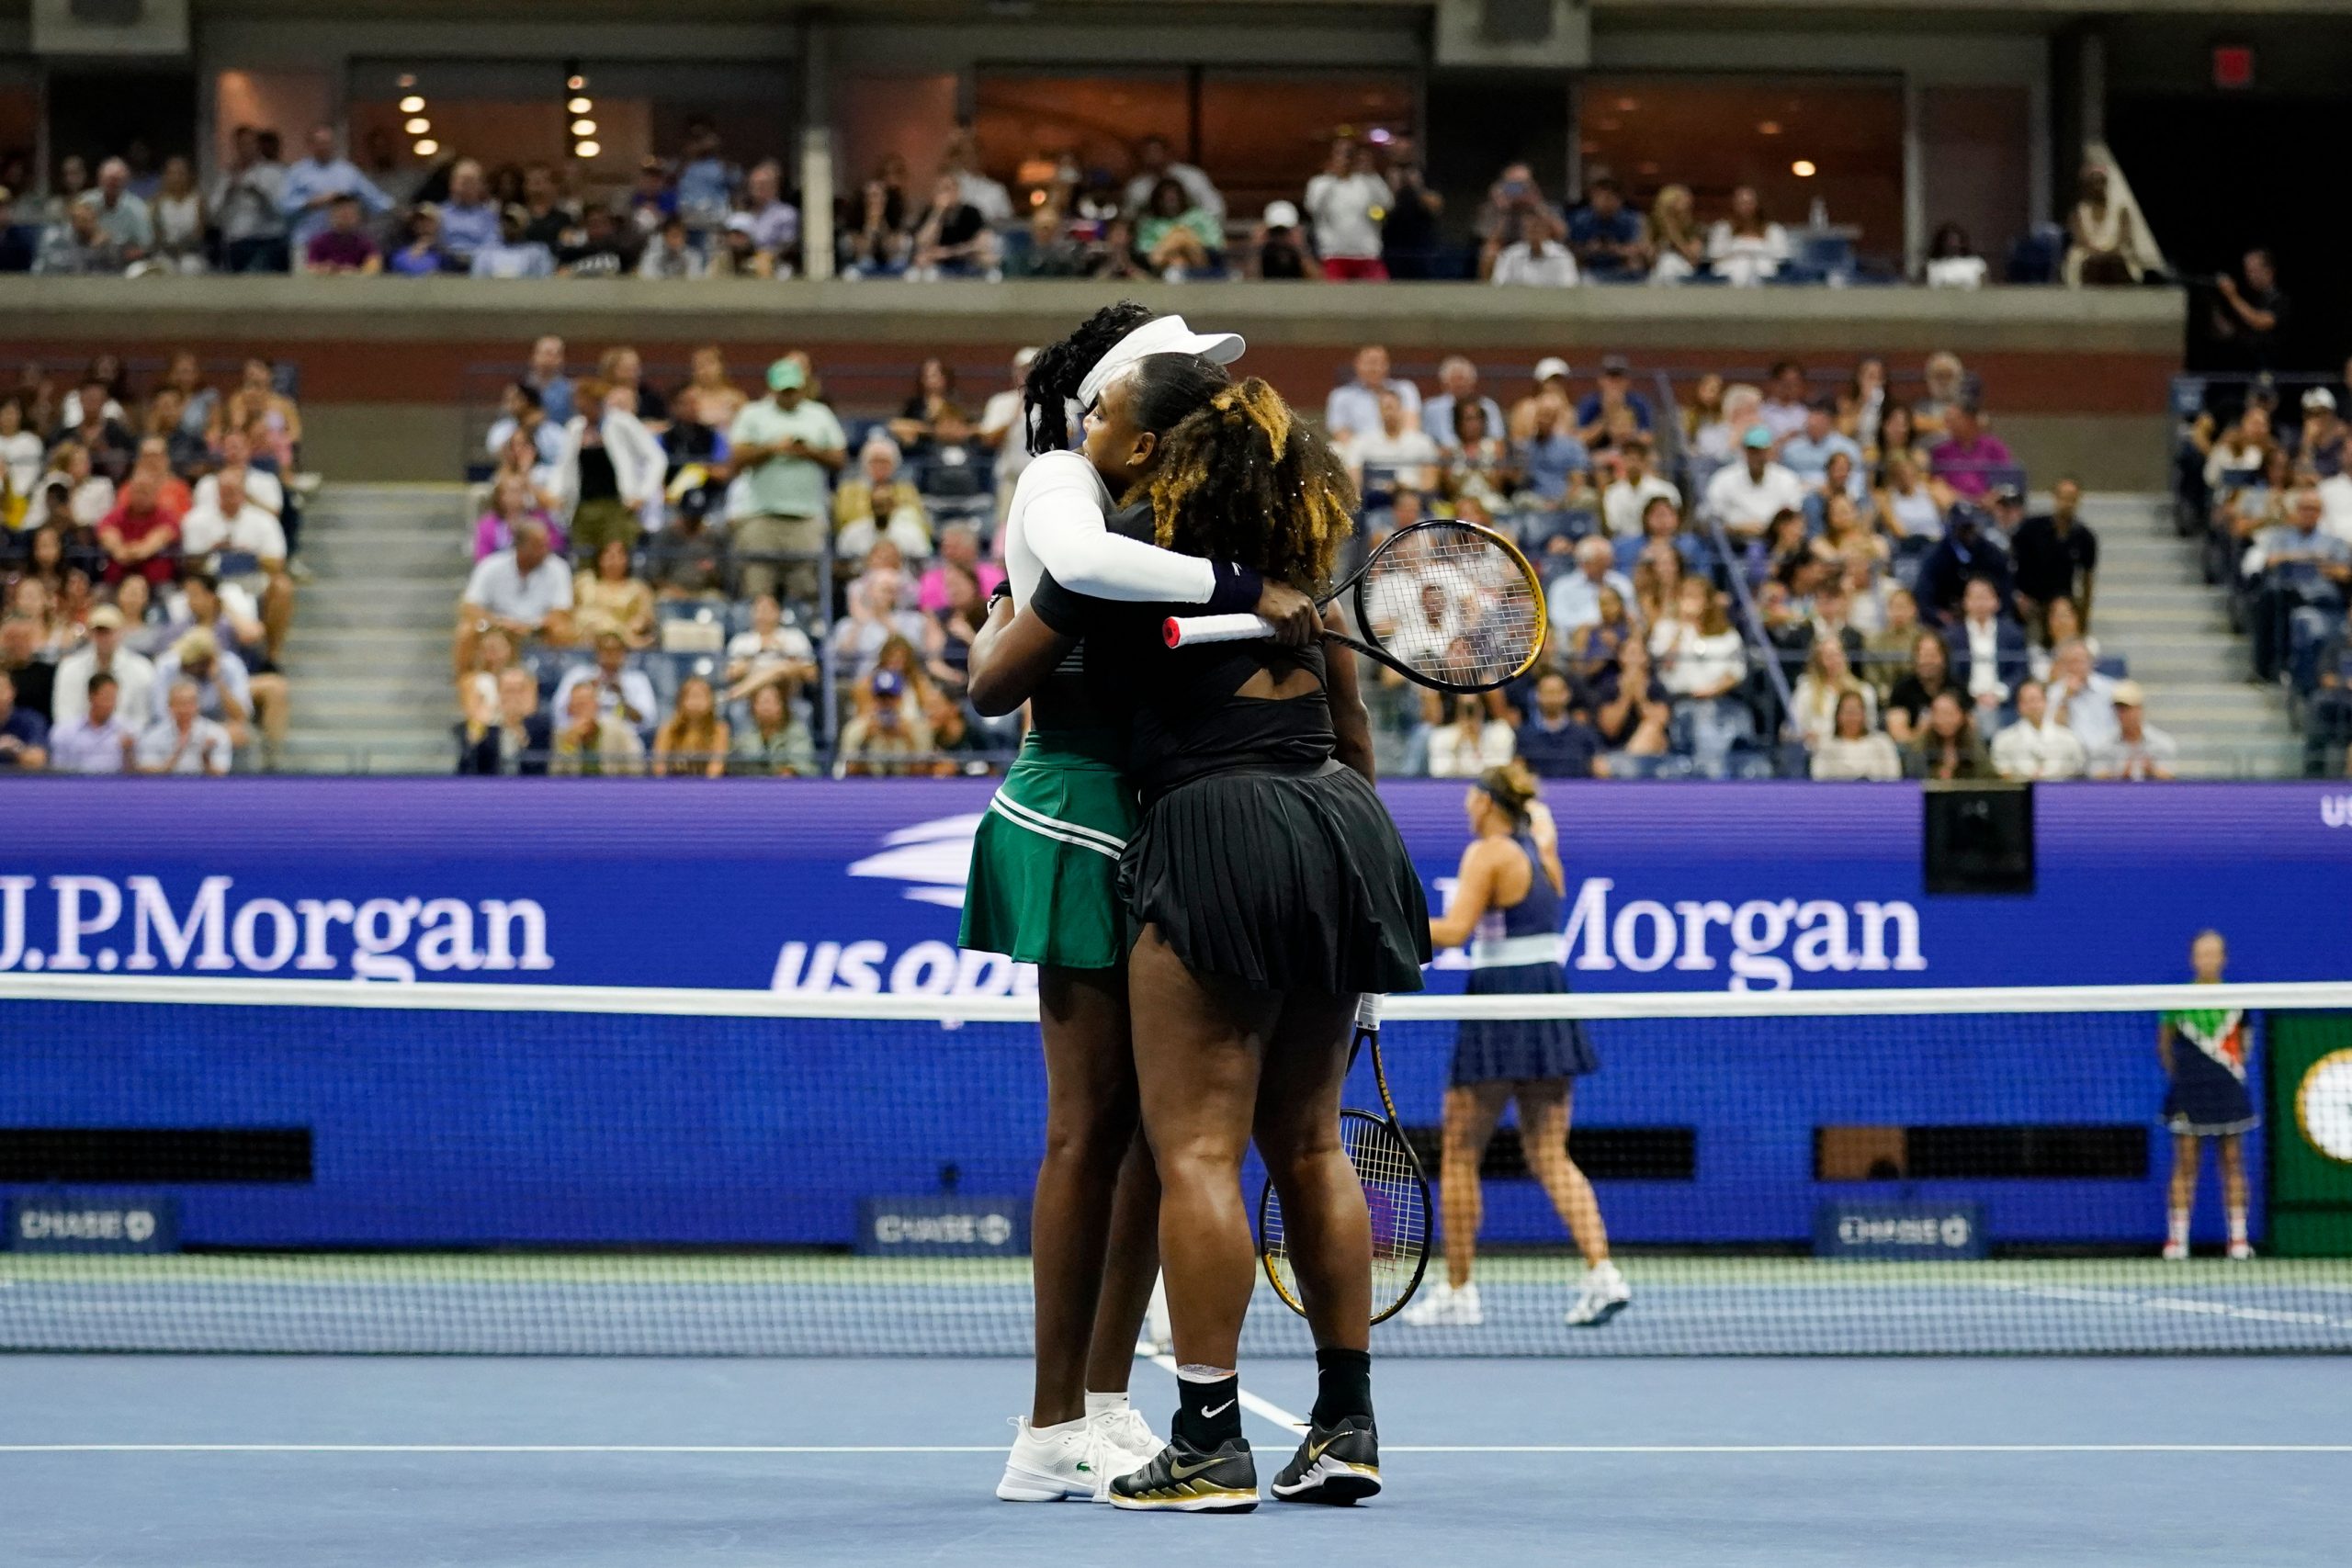 Serena, Venus Williams lose in 1st round of US Open doubles